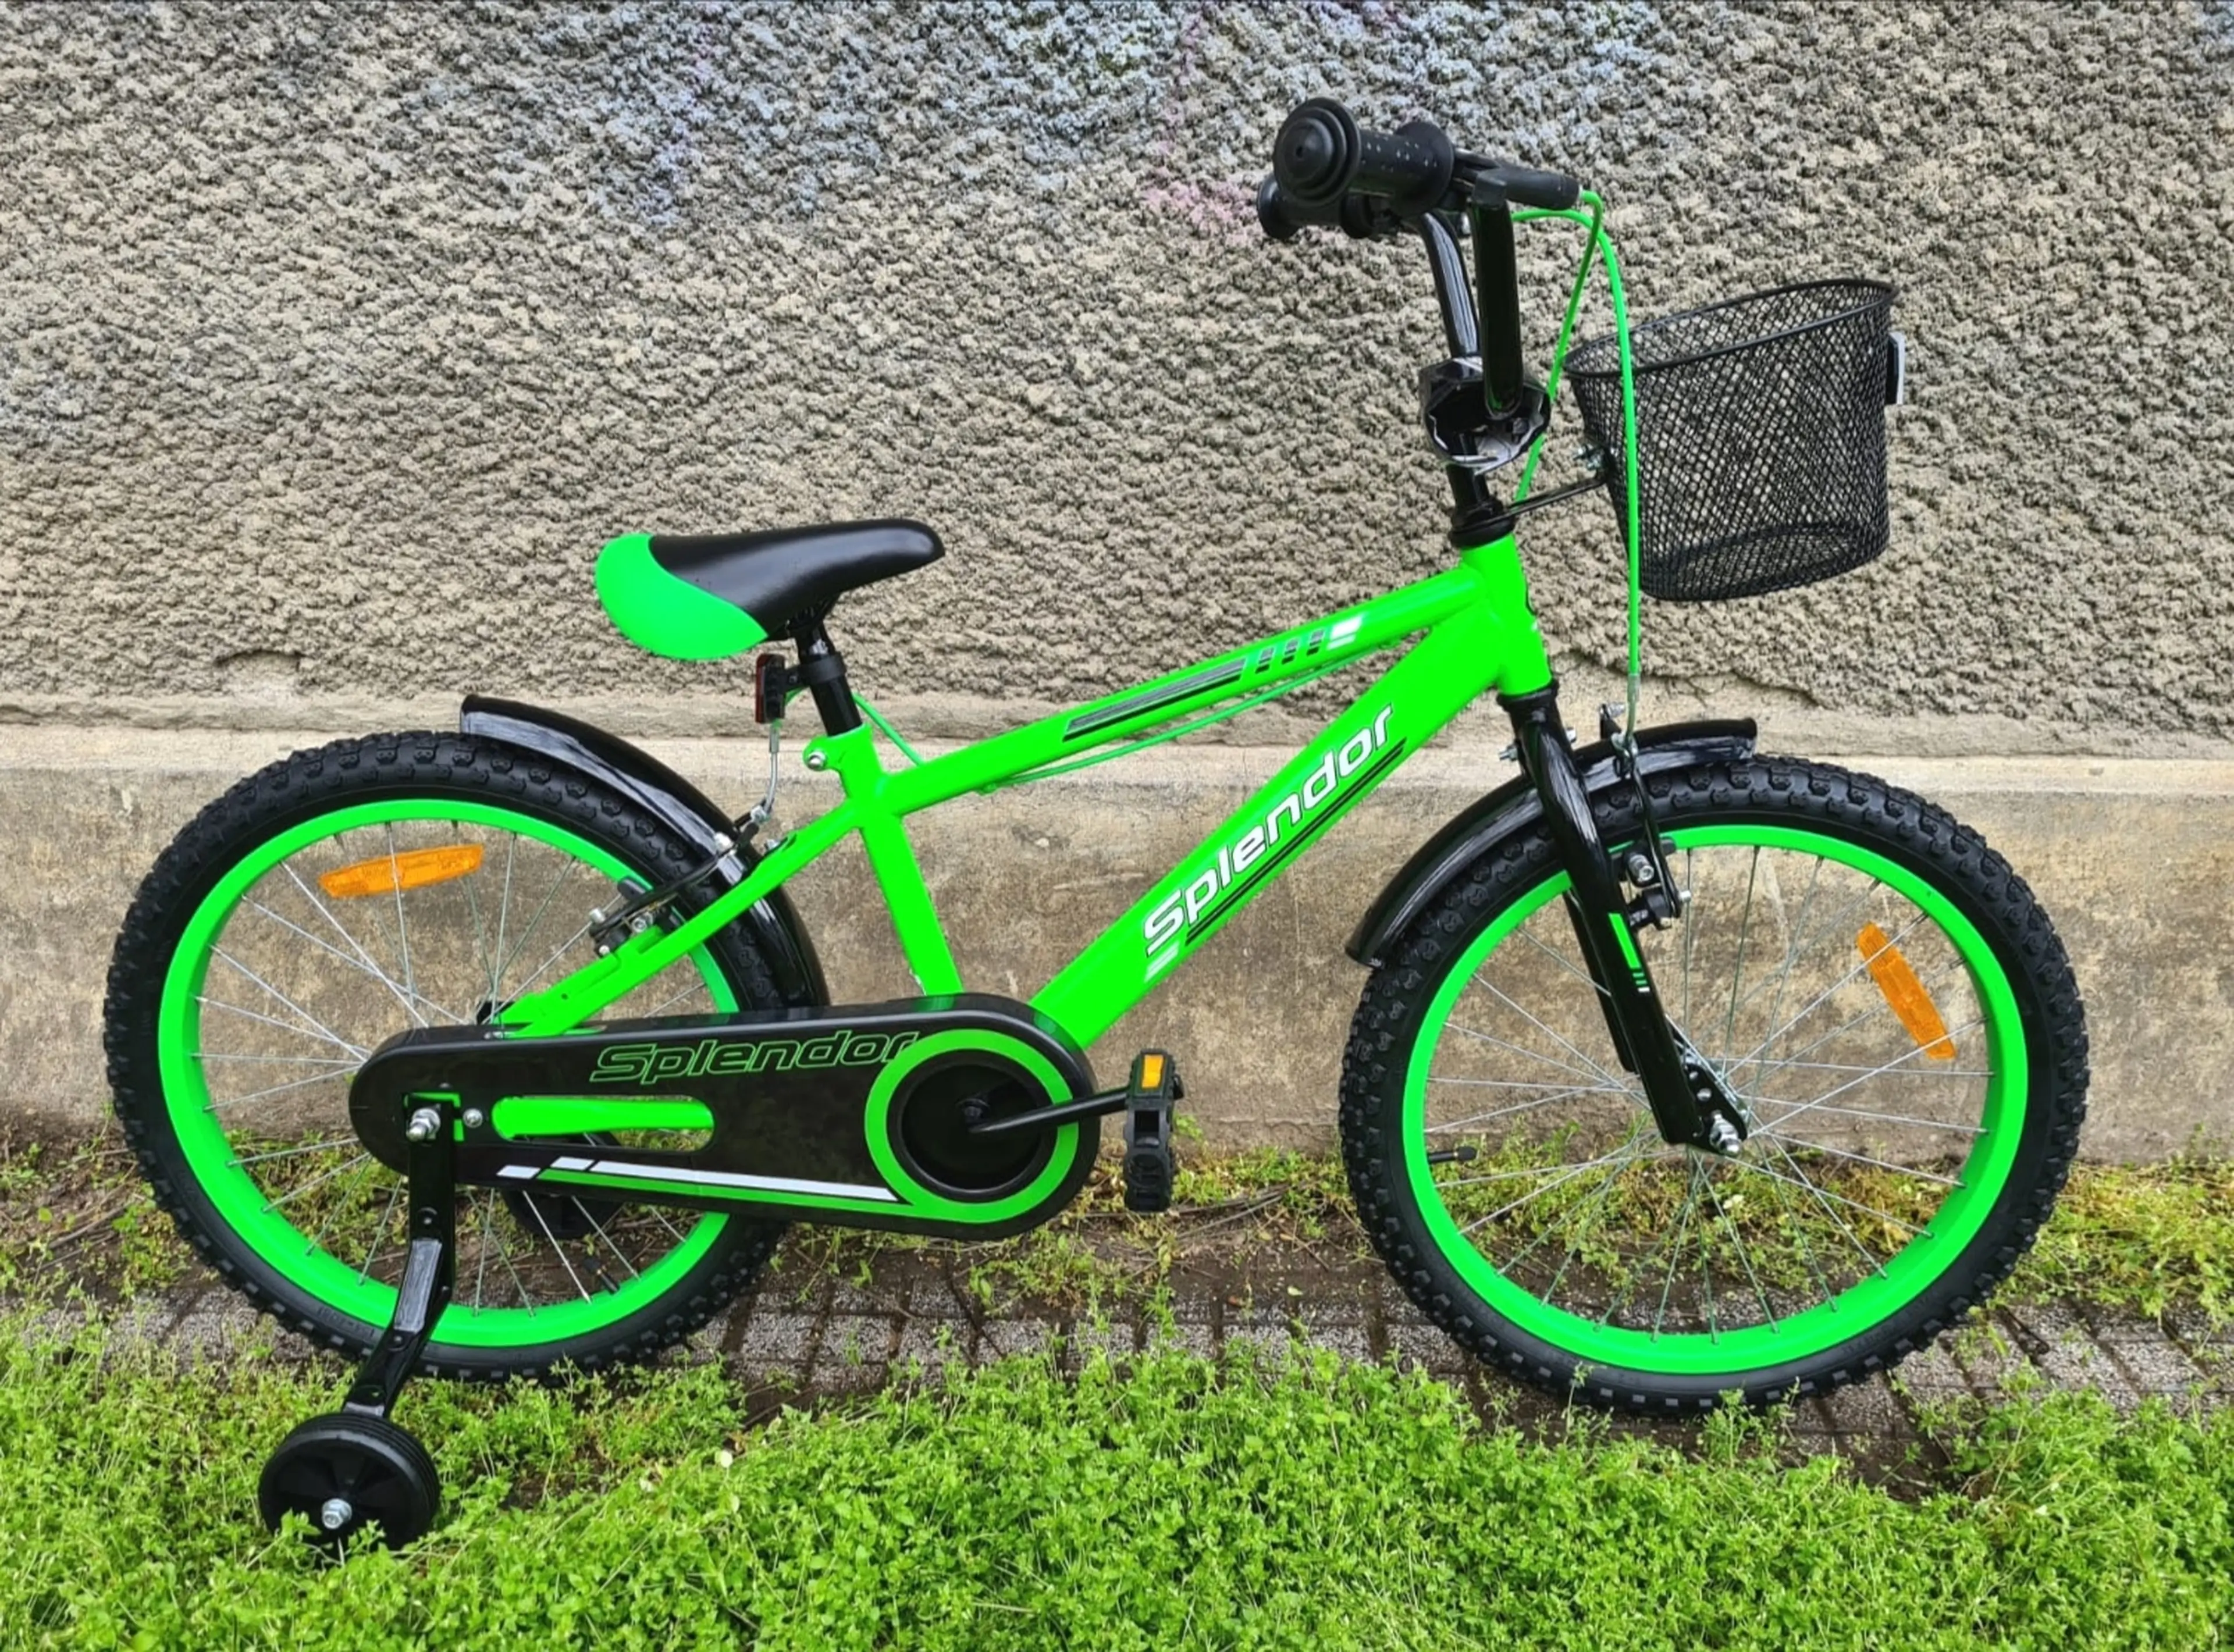 4. Bicicleta Splendor 20 inch pentru copii